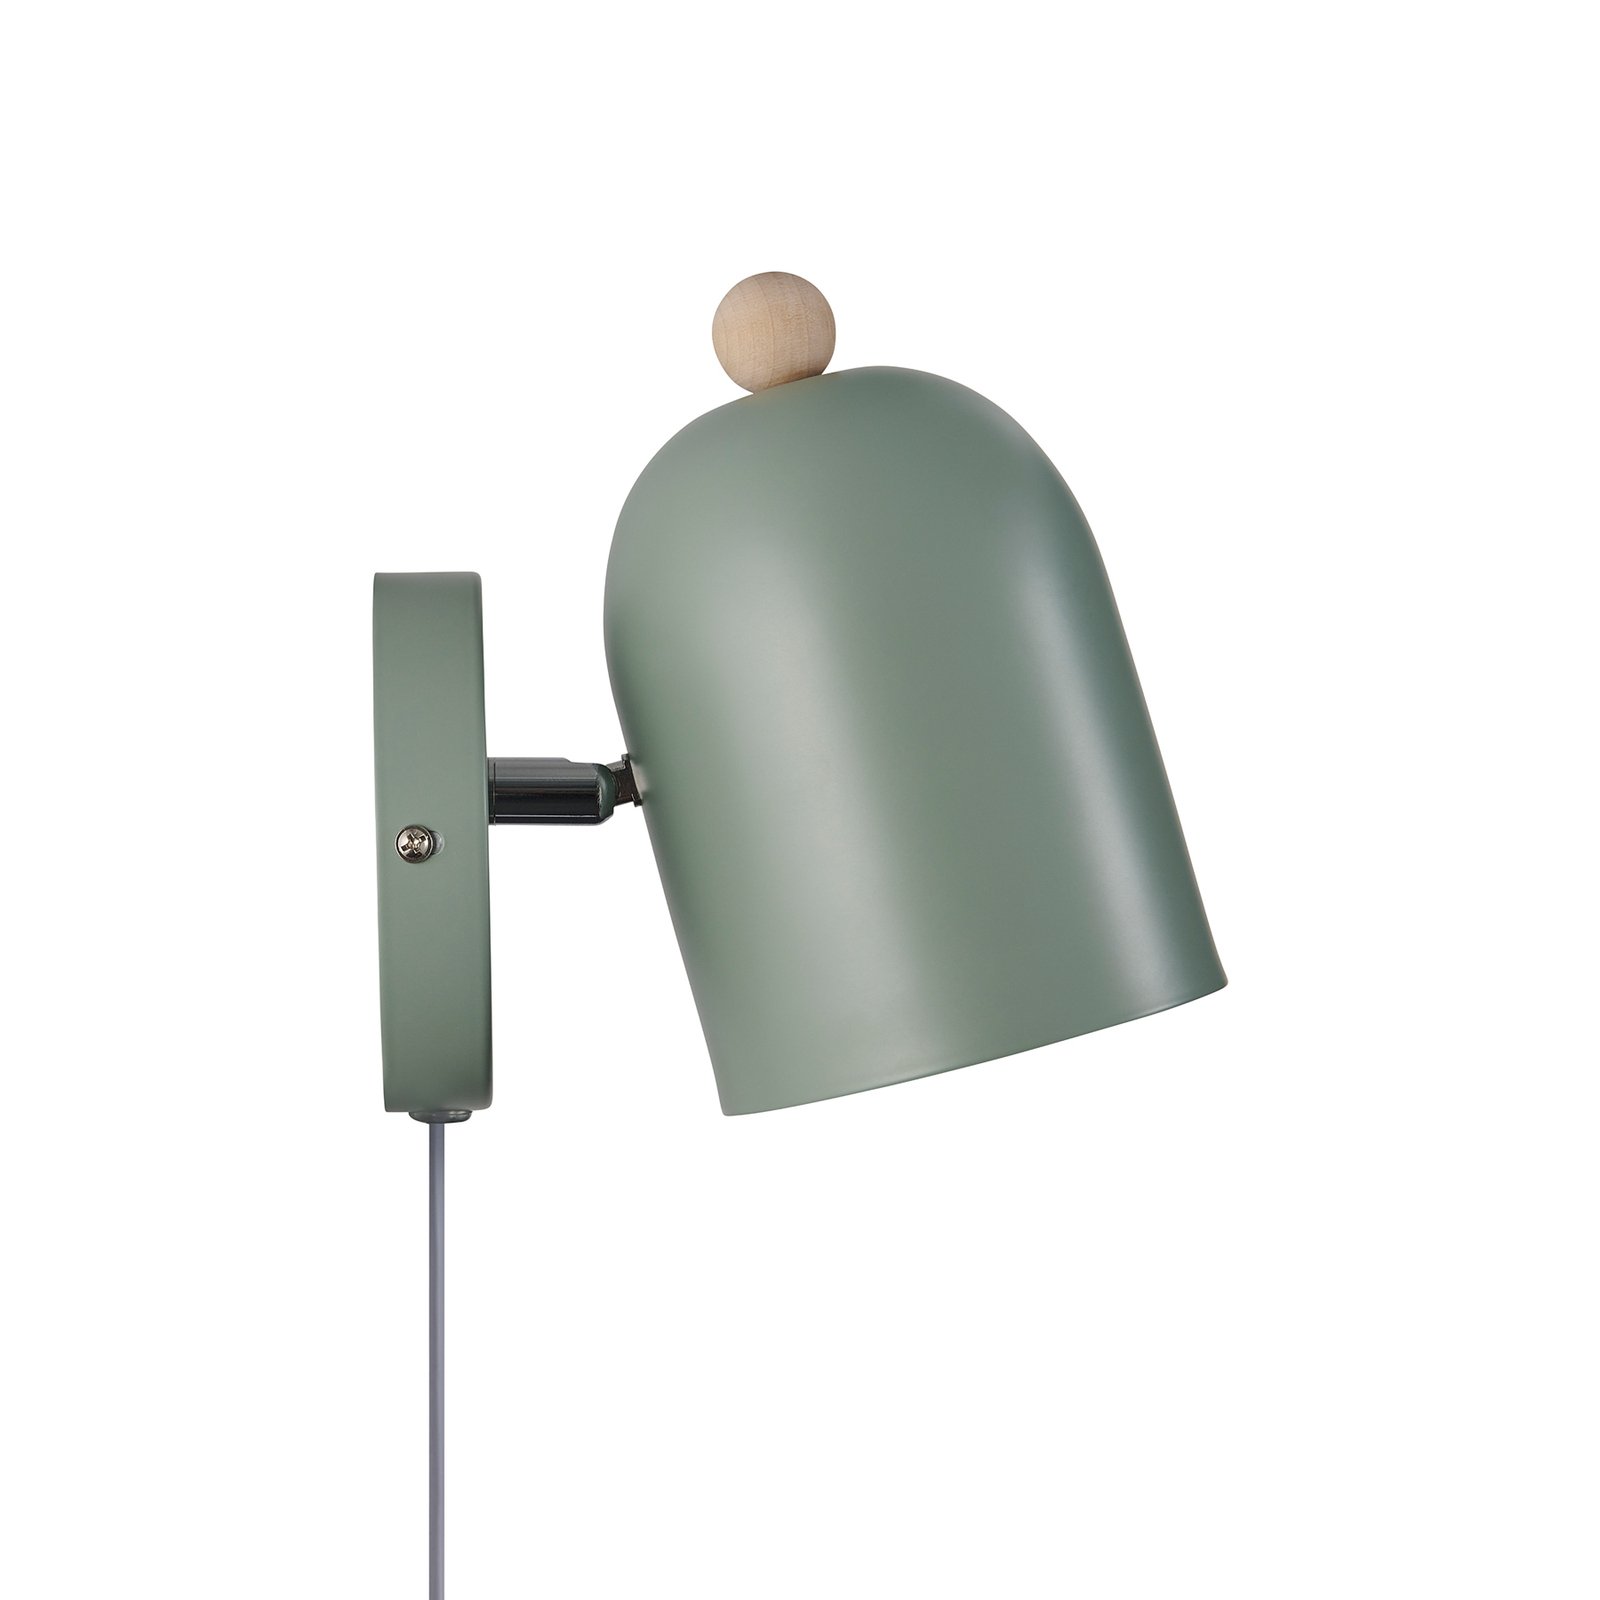 Gaston wall light with cable and plug, metal, green